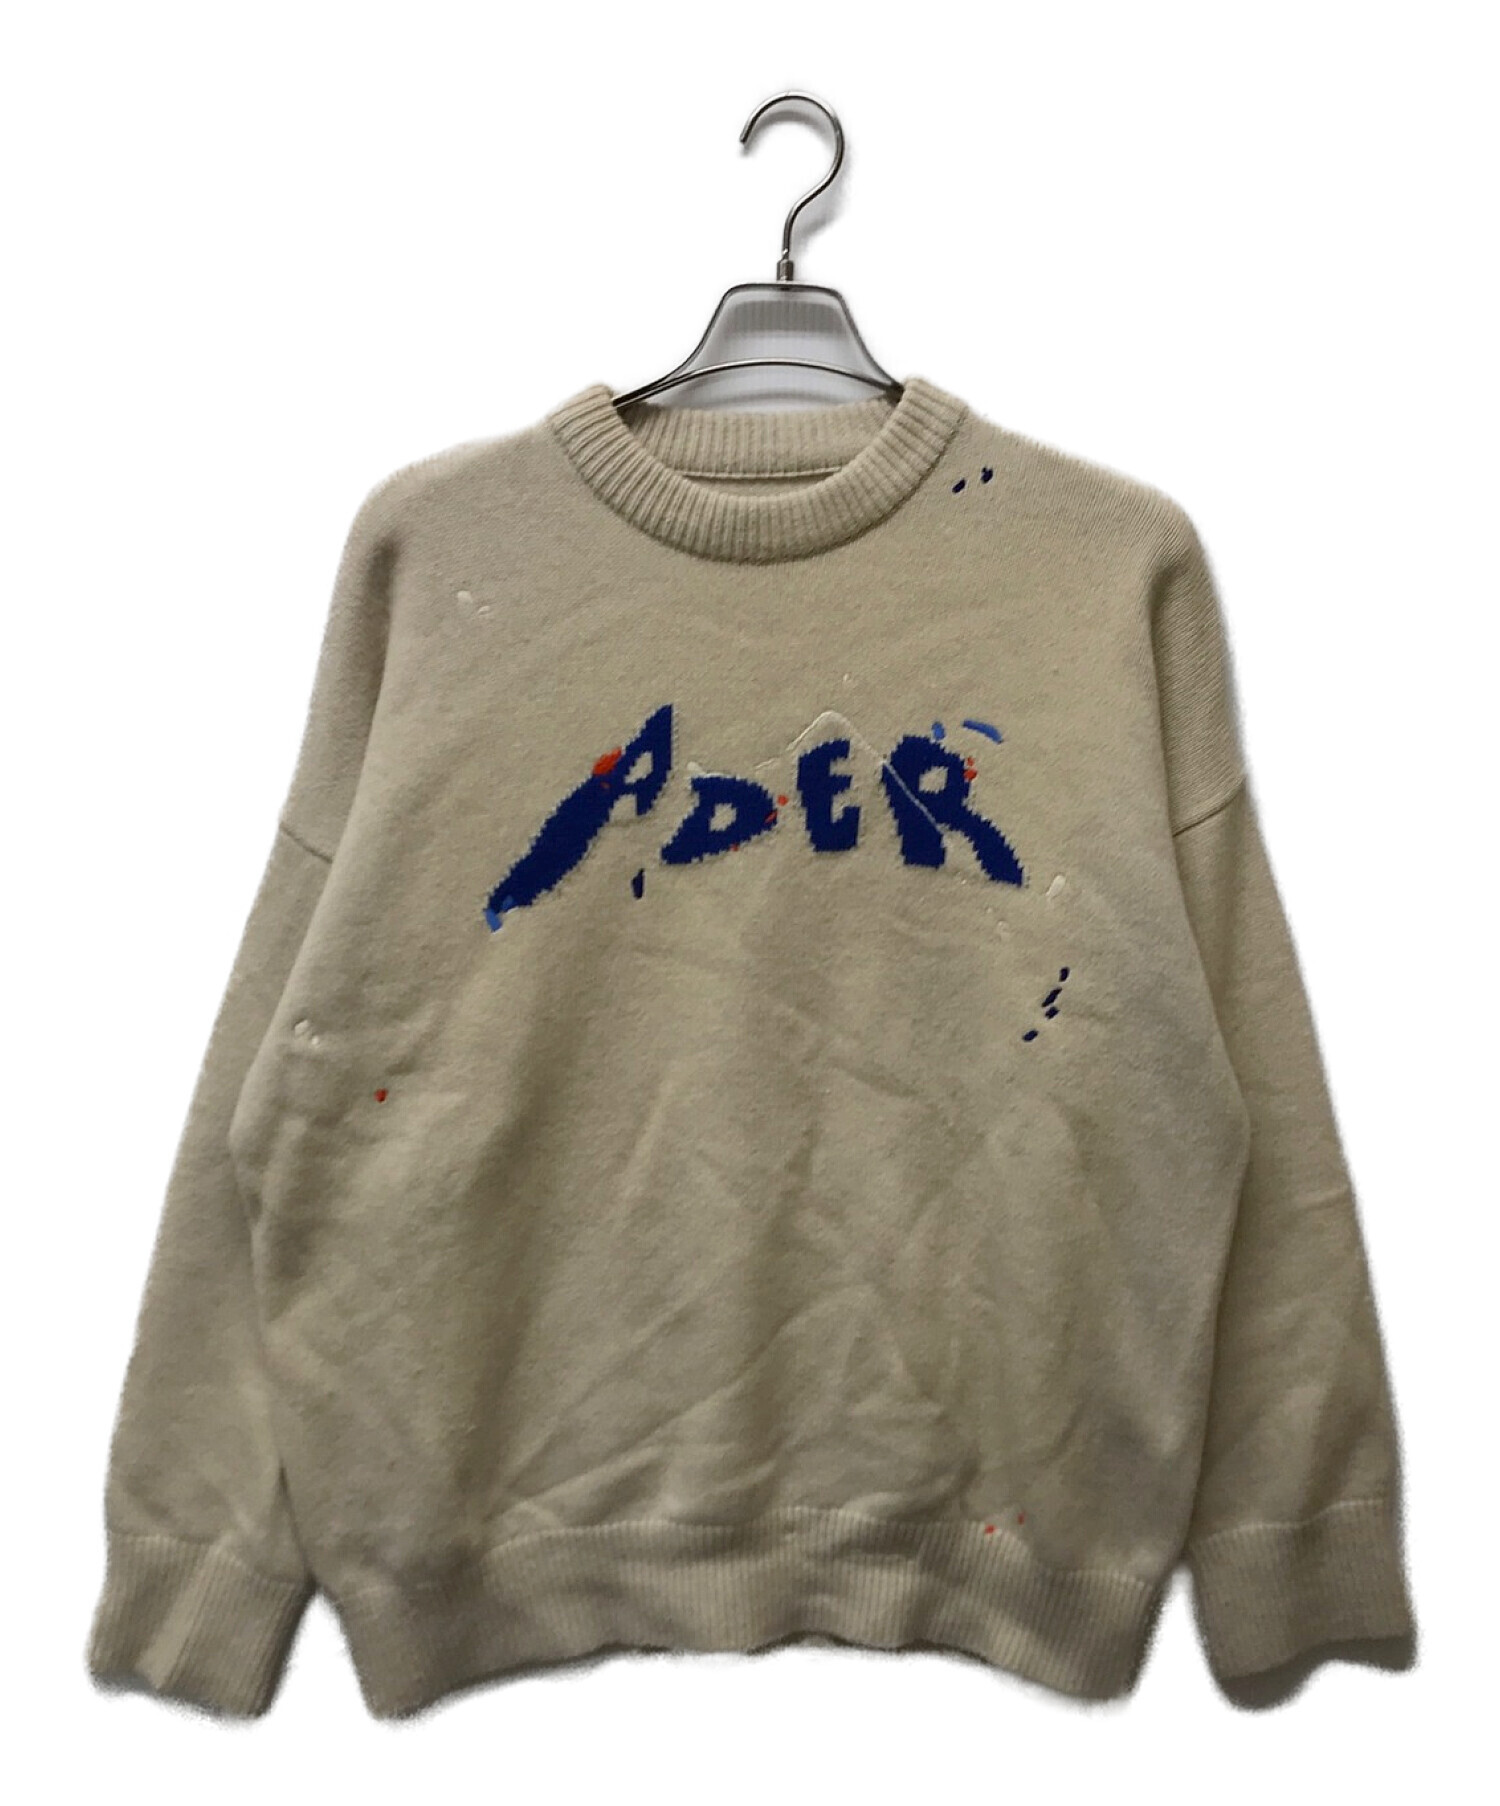 ADER Error Sweatshirt Pullover サイズA1 - スウェット